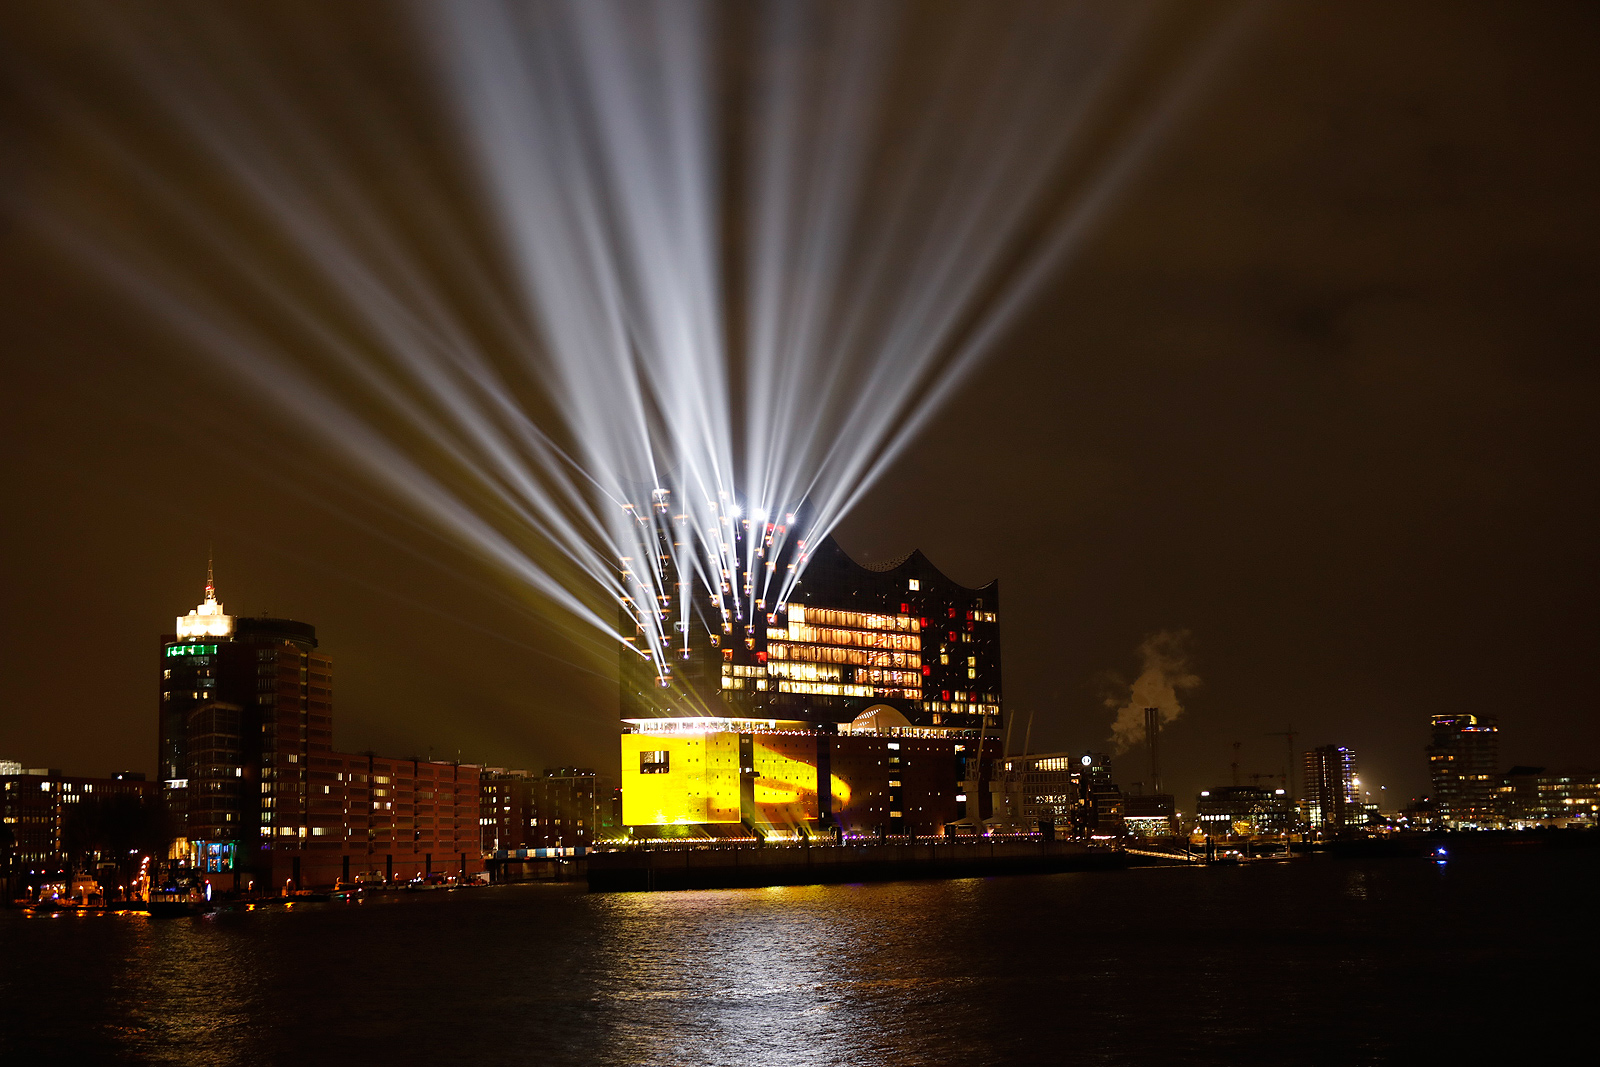 Panasonic 31,000 lumen projection in use at Elbphilharmonie in Hamburg